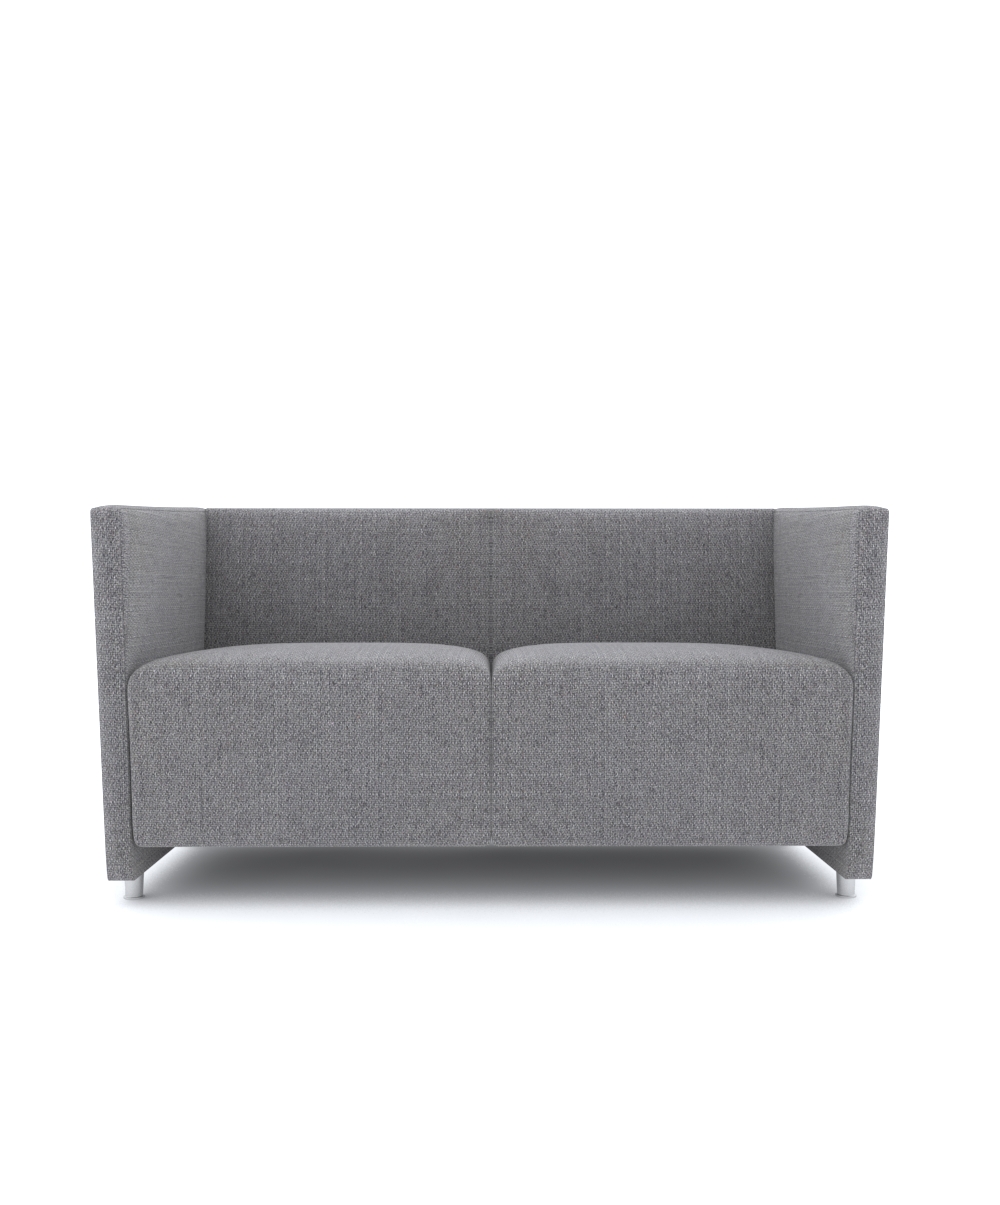 Basic classic Sofa